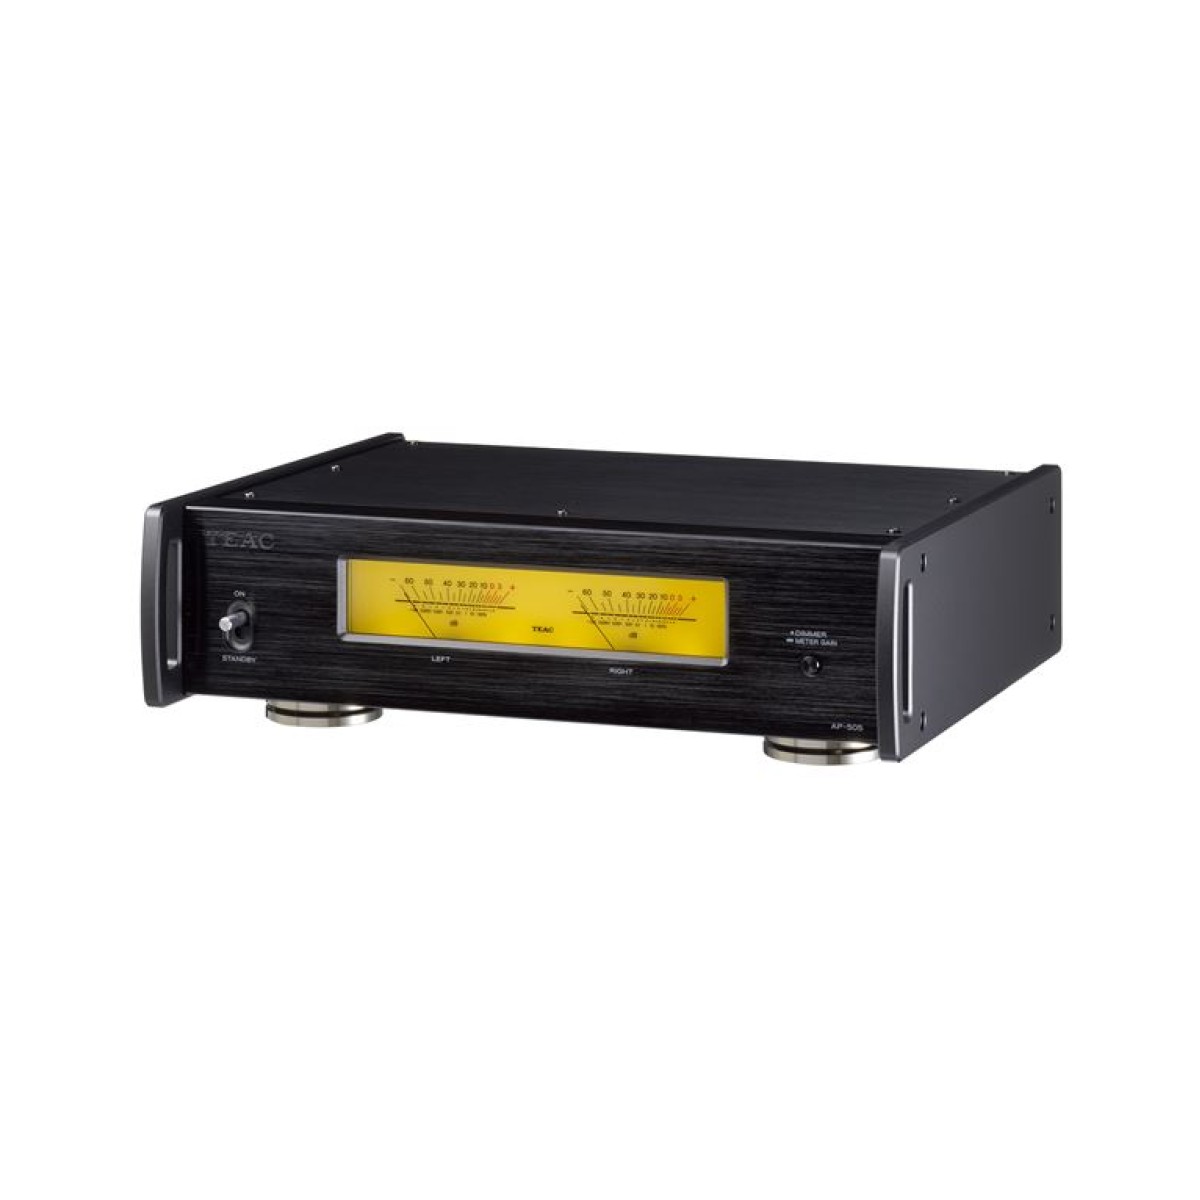 TEAC AP-505 Black Stereo Tελικός Eνισχυτής